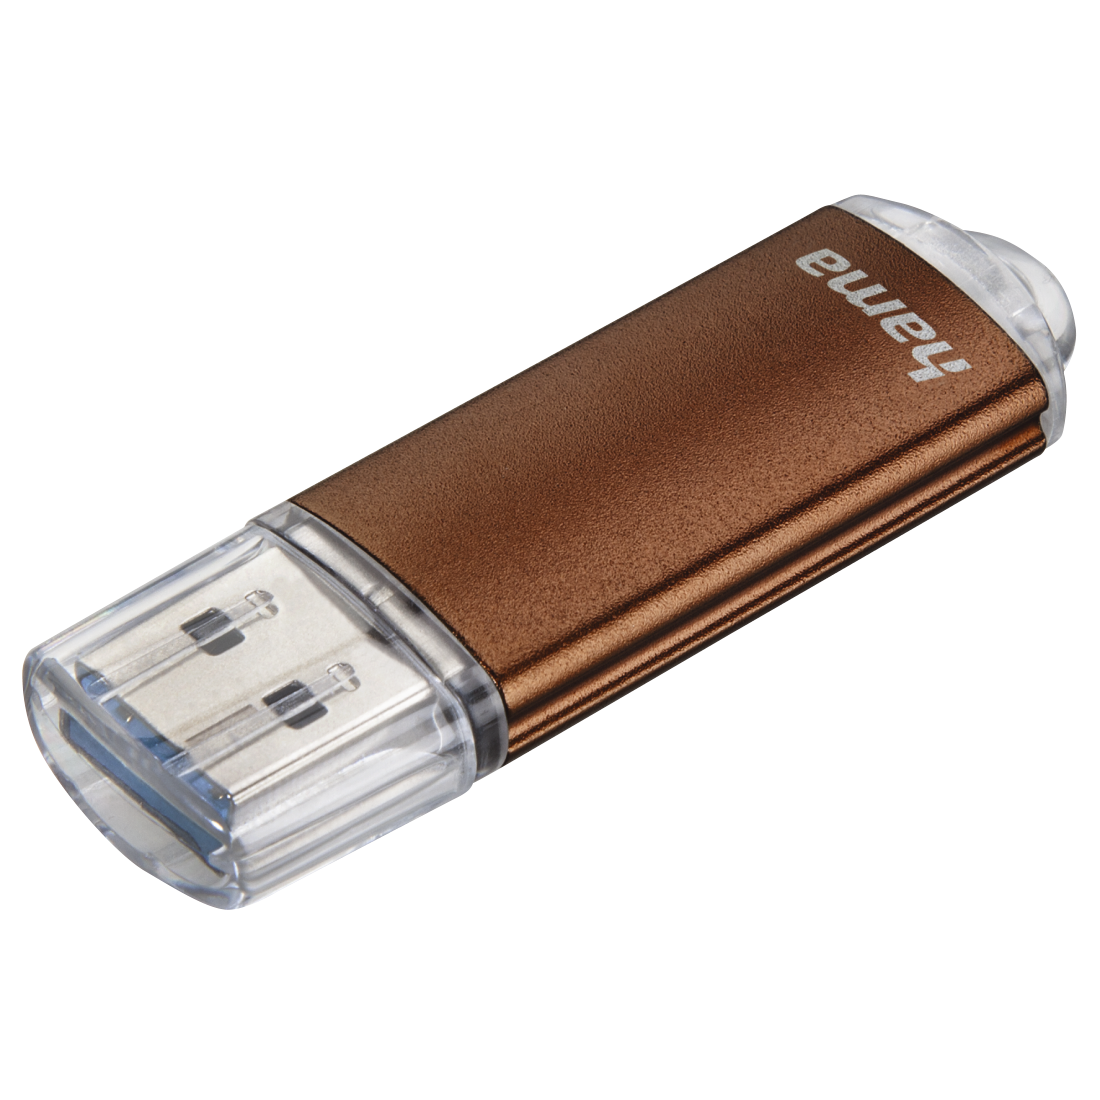 00124003 Hama "Laeta" USB Stick, USB 3.0, 32 GB, 70 MB/s, bronze | hama.com